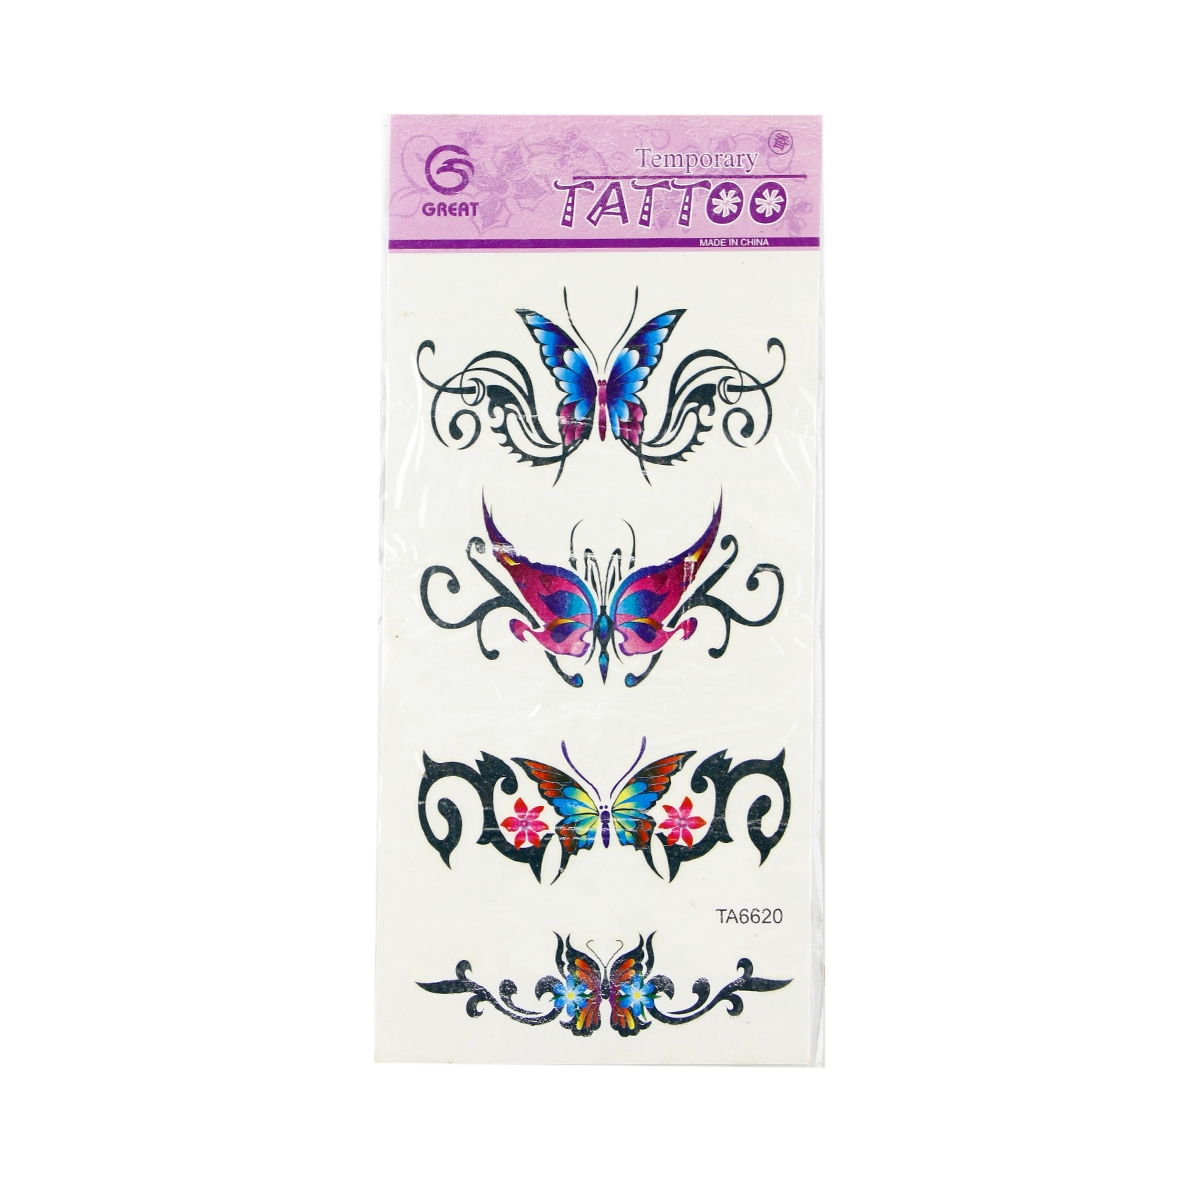 Ogc Tatuaj corp temporar tatto stickers ta6620